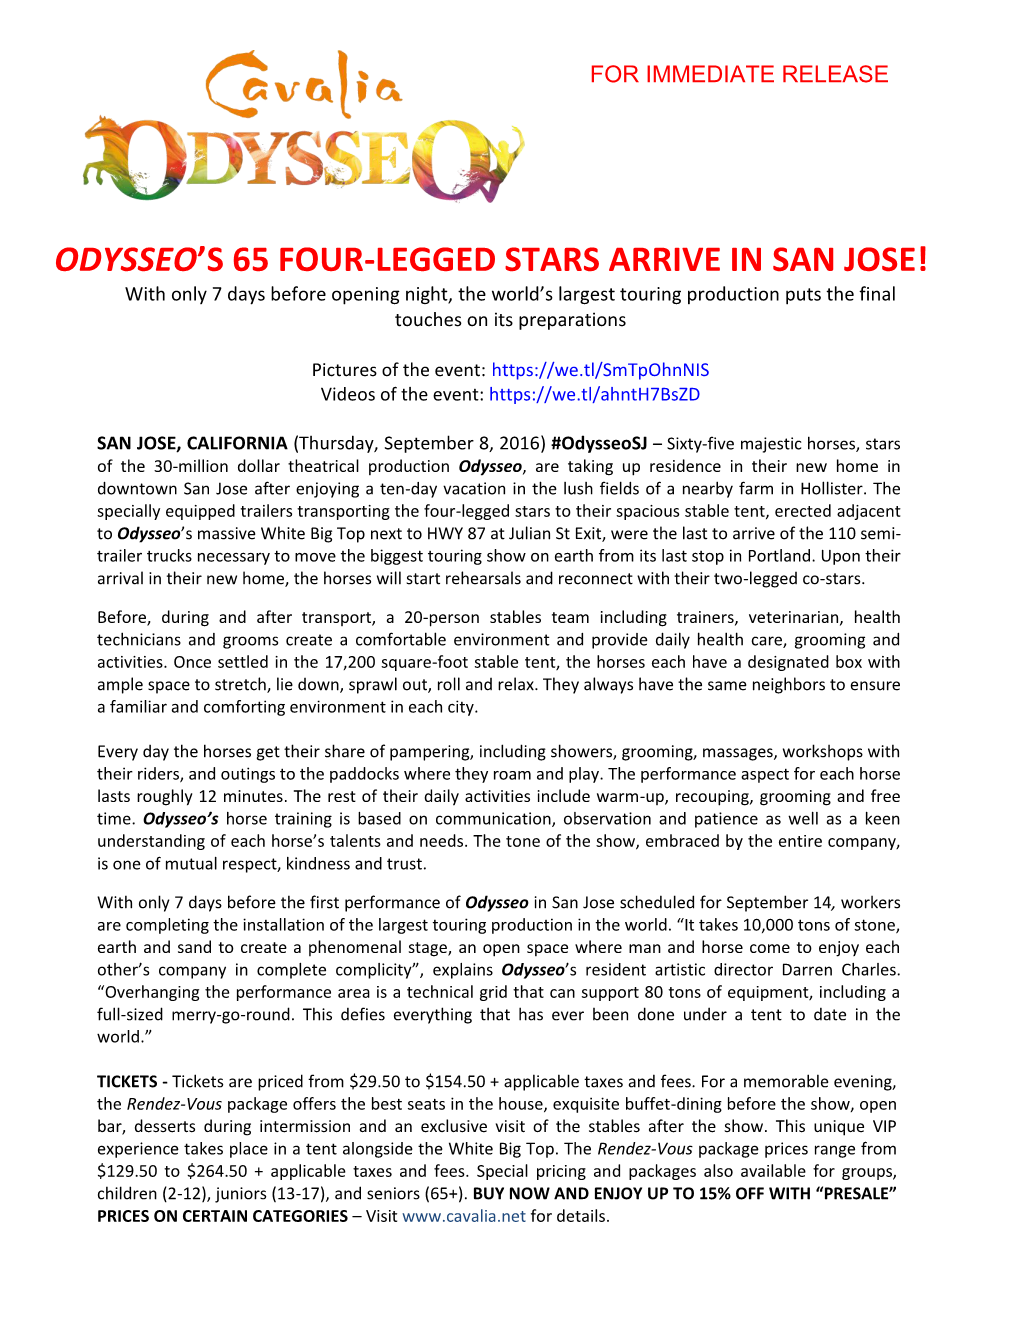 Odysseo's 65 Four-Legged Stars Arrive in San